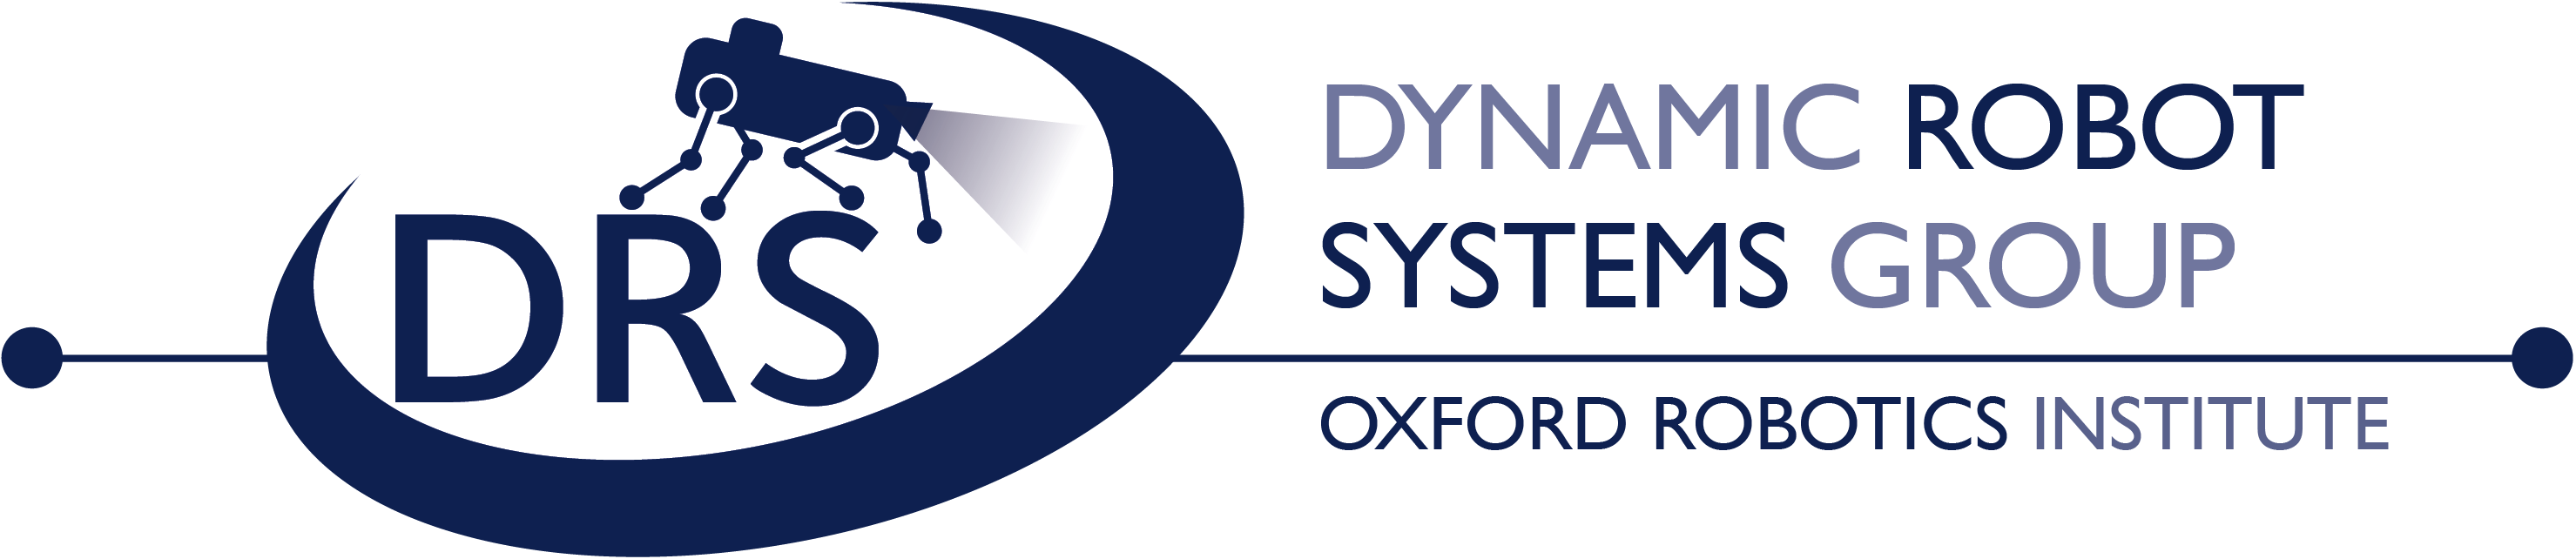 Dynamic Robots Systems (DRS) oval logo. 